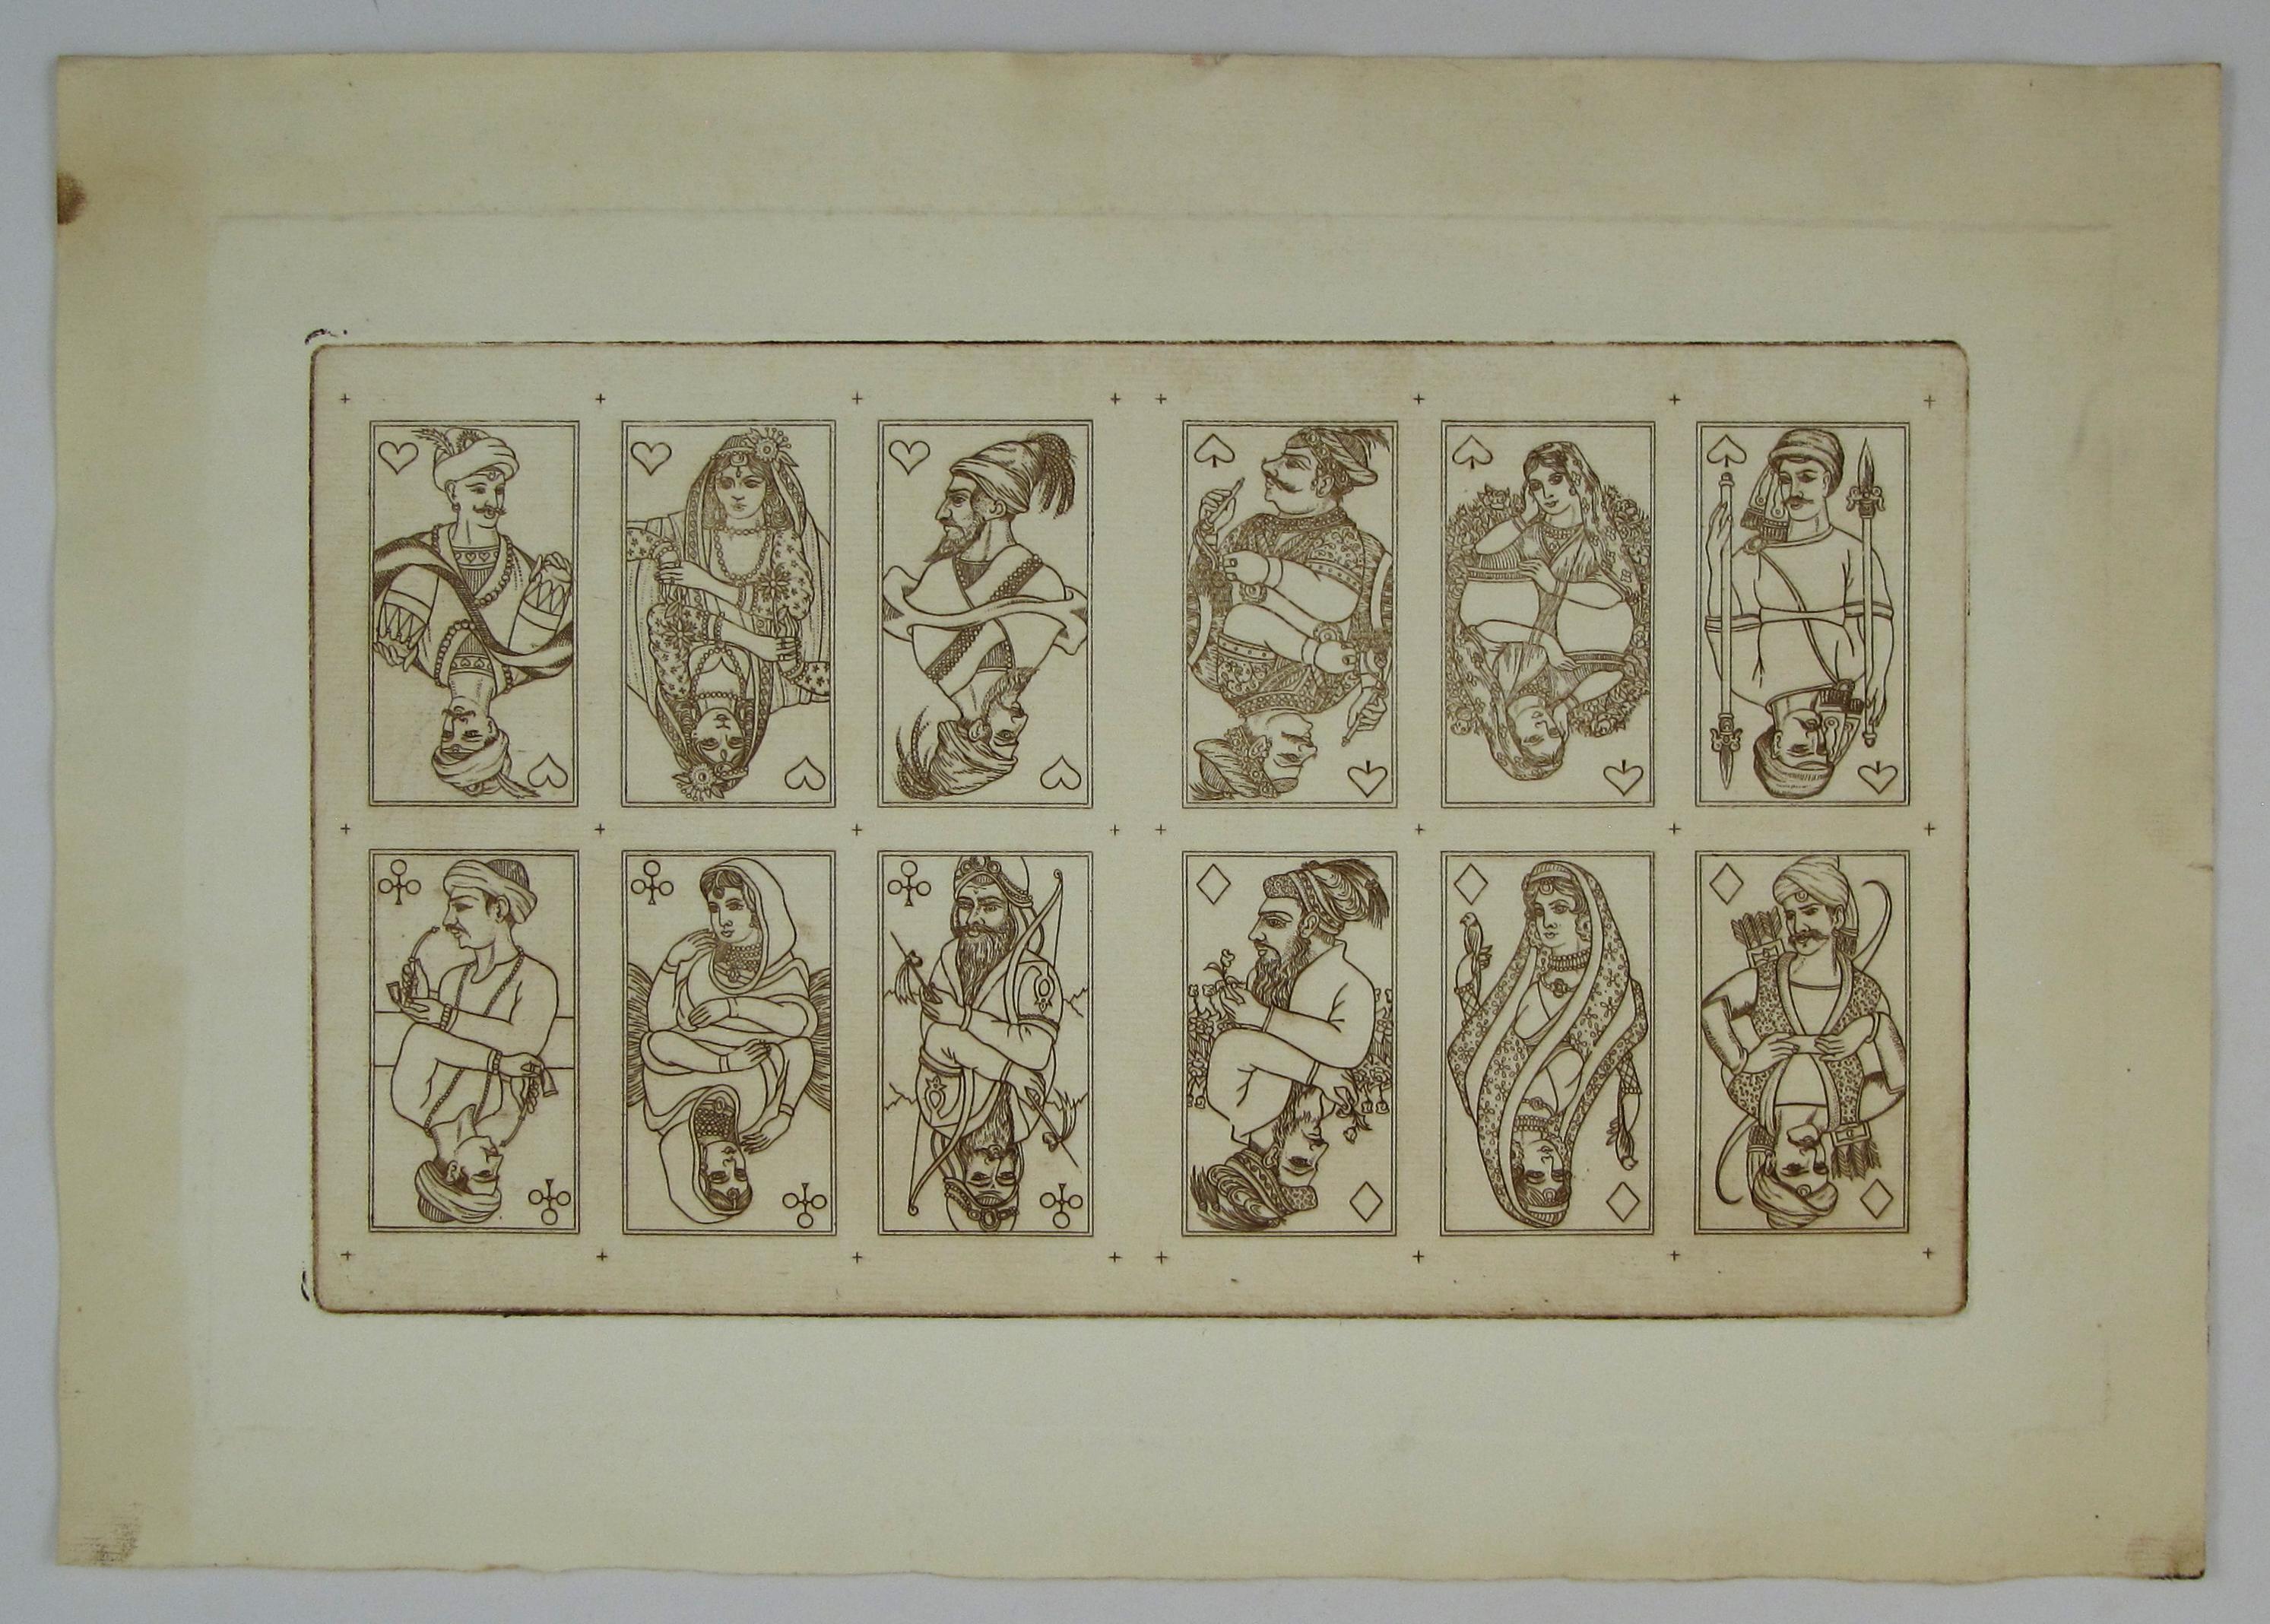 Ganesh No. 35, 1992 by Karl Gerich of Bath - Playing Card Print Sheet - Brown Figurative Print by Karl Alexander Gerich